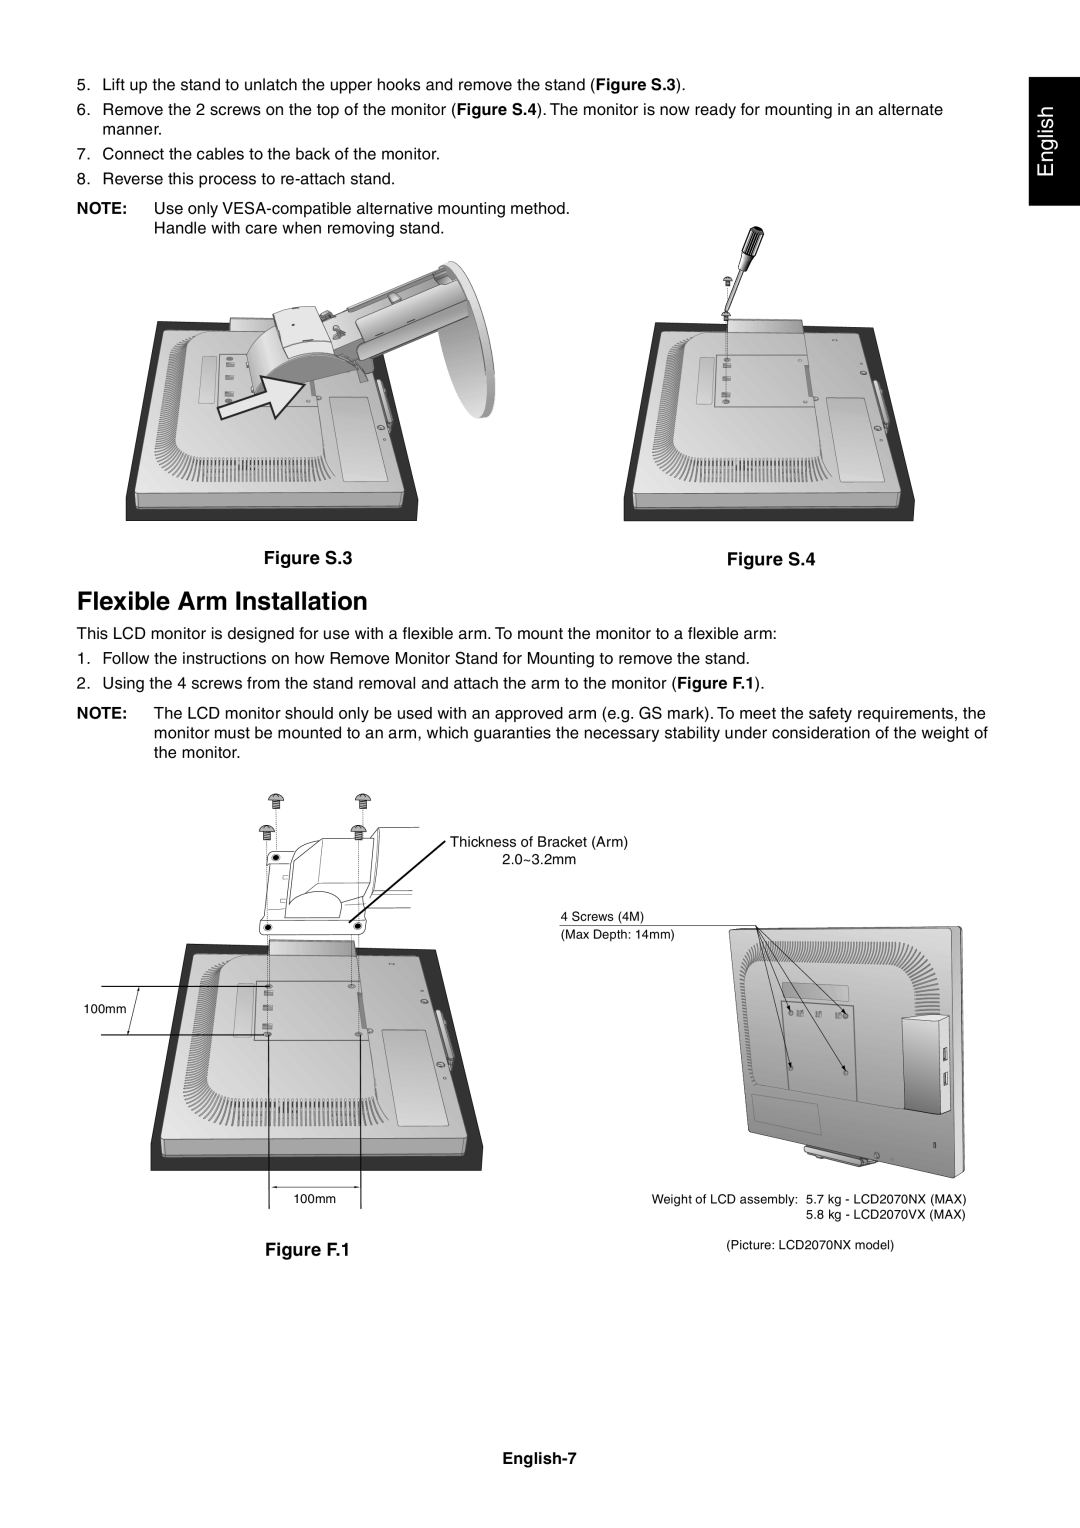 NEC LCD2070NX user manual Flexible Arm Installation, English, Figure S.3, Figure S.4, Figure F.1 